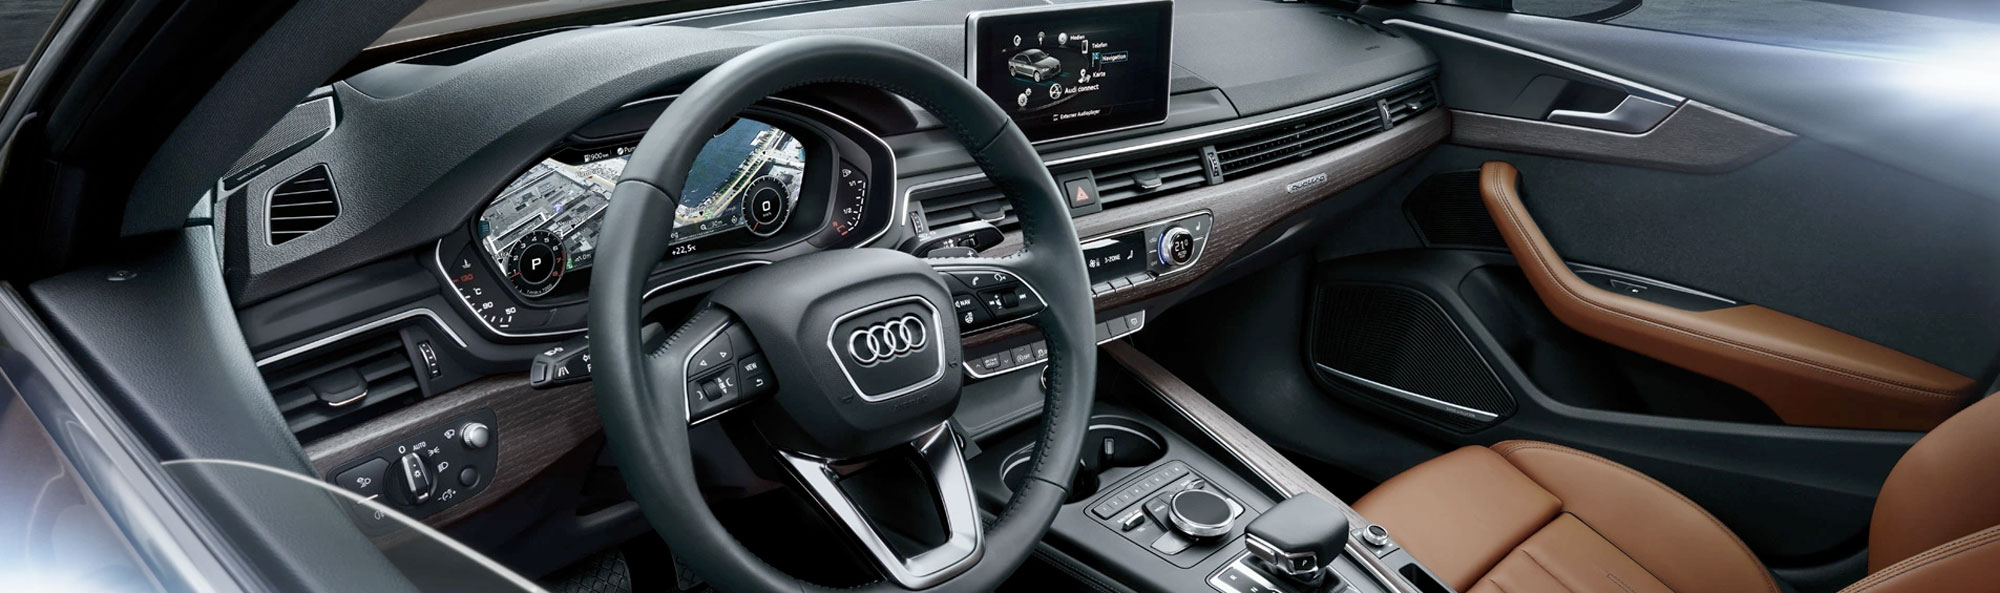 Audi_A4_B9_Navigation_teaser.jpg